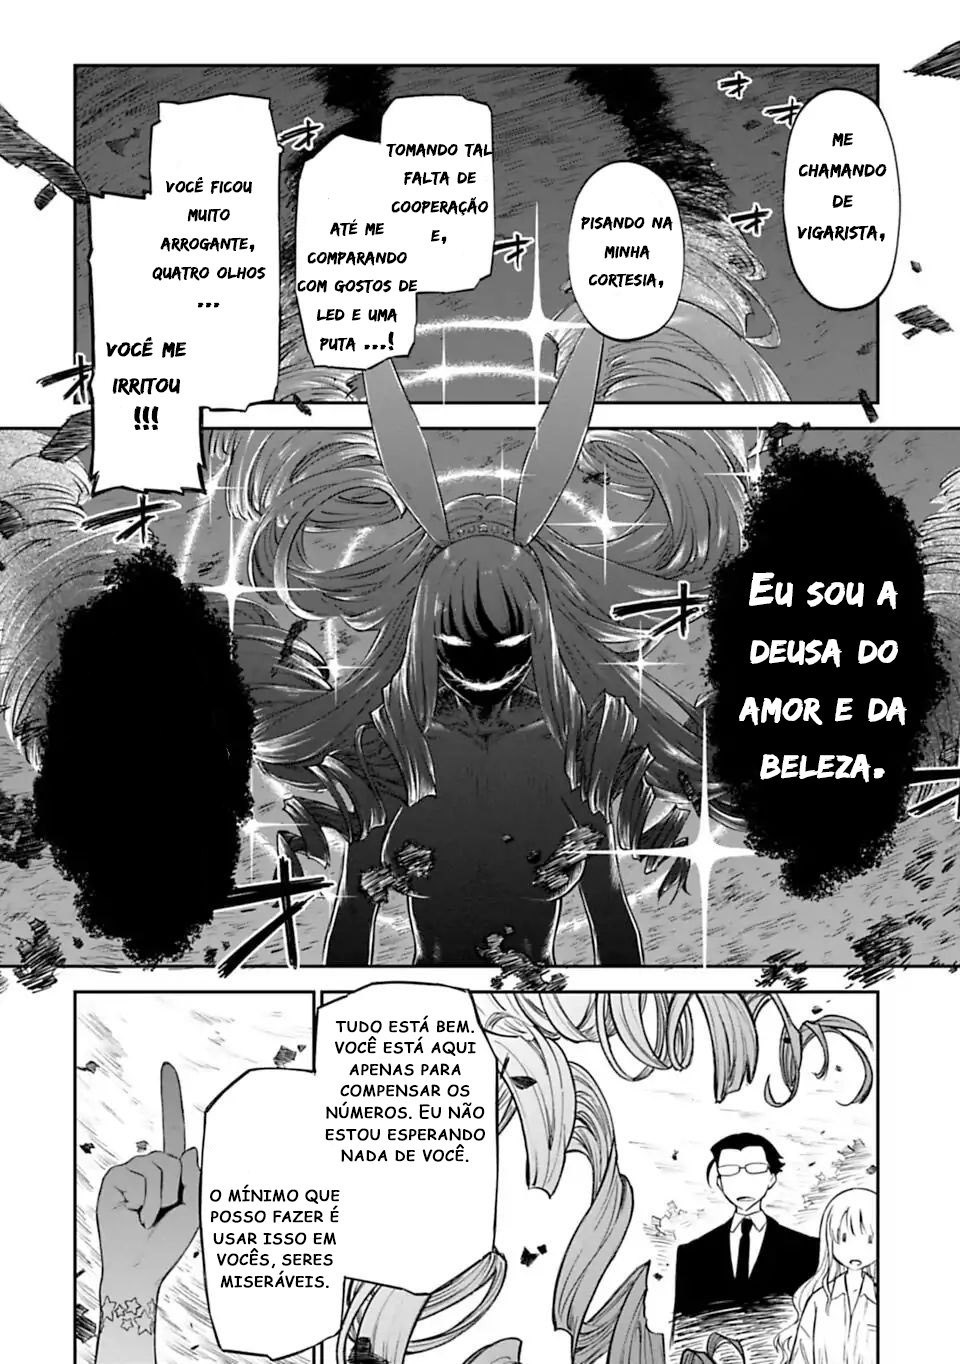 Fantasy Bishoujo Juniku Ojisan to Capítulo 8.00 - Mangalandia